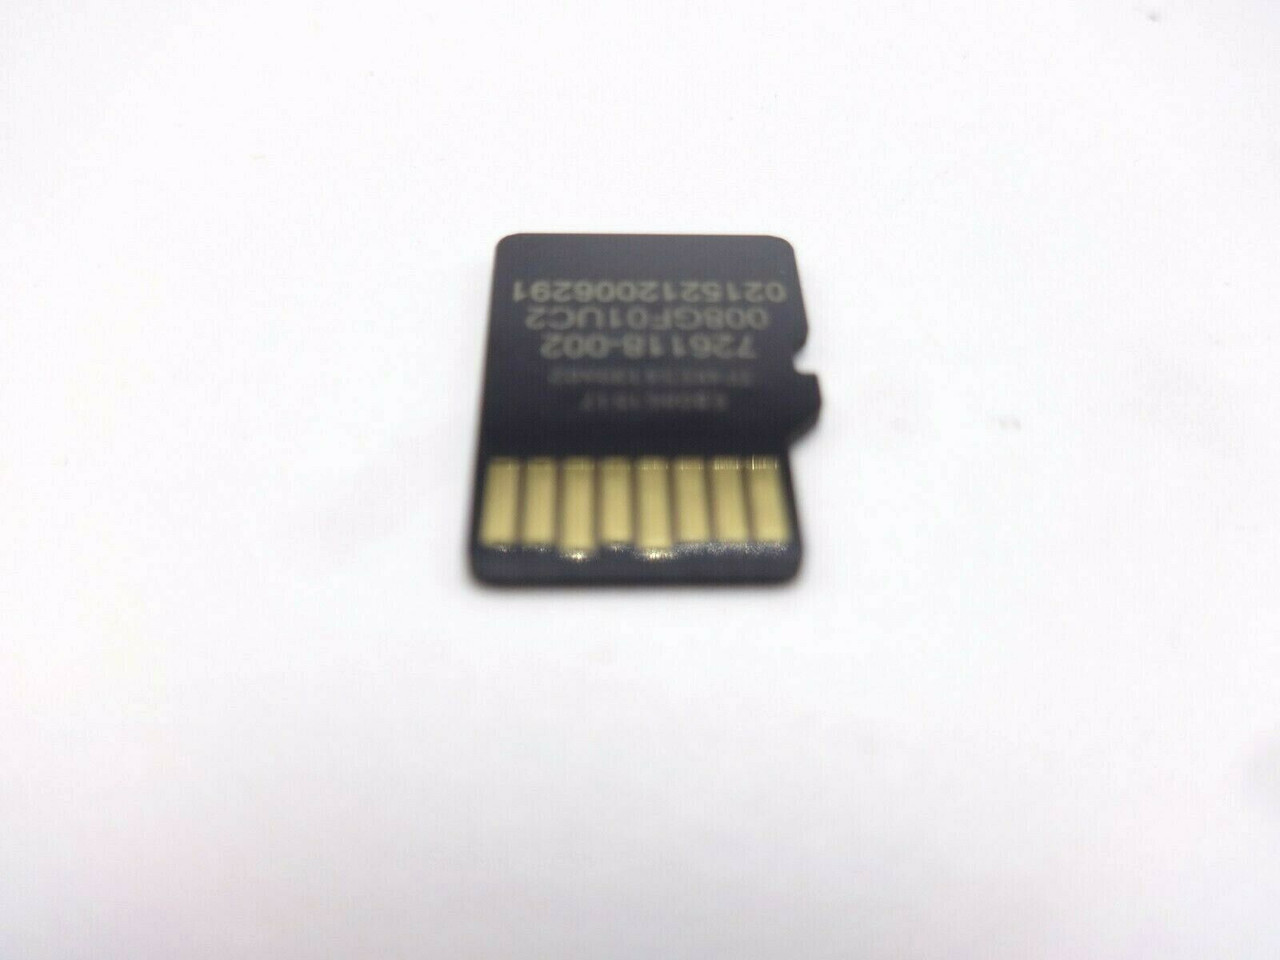 HP 726118-002 8GB Micro SDHC Flash Media Card